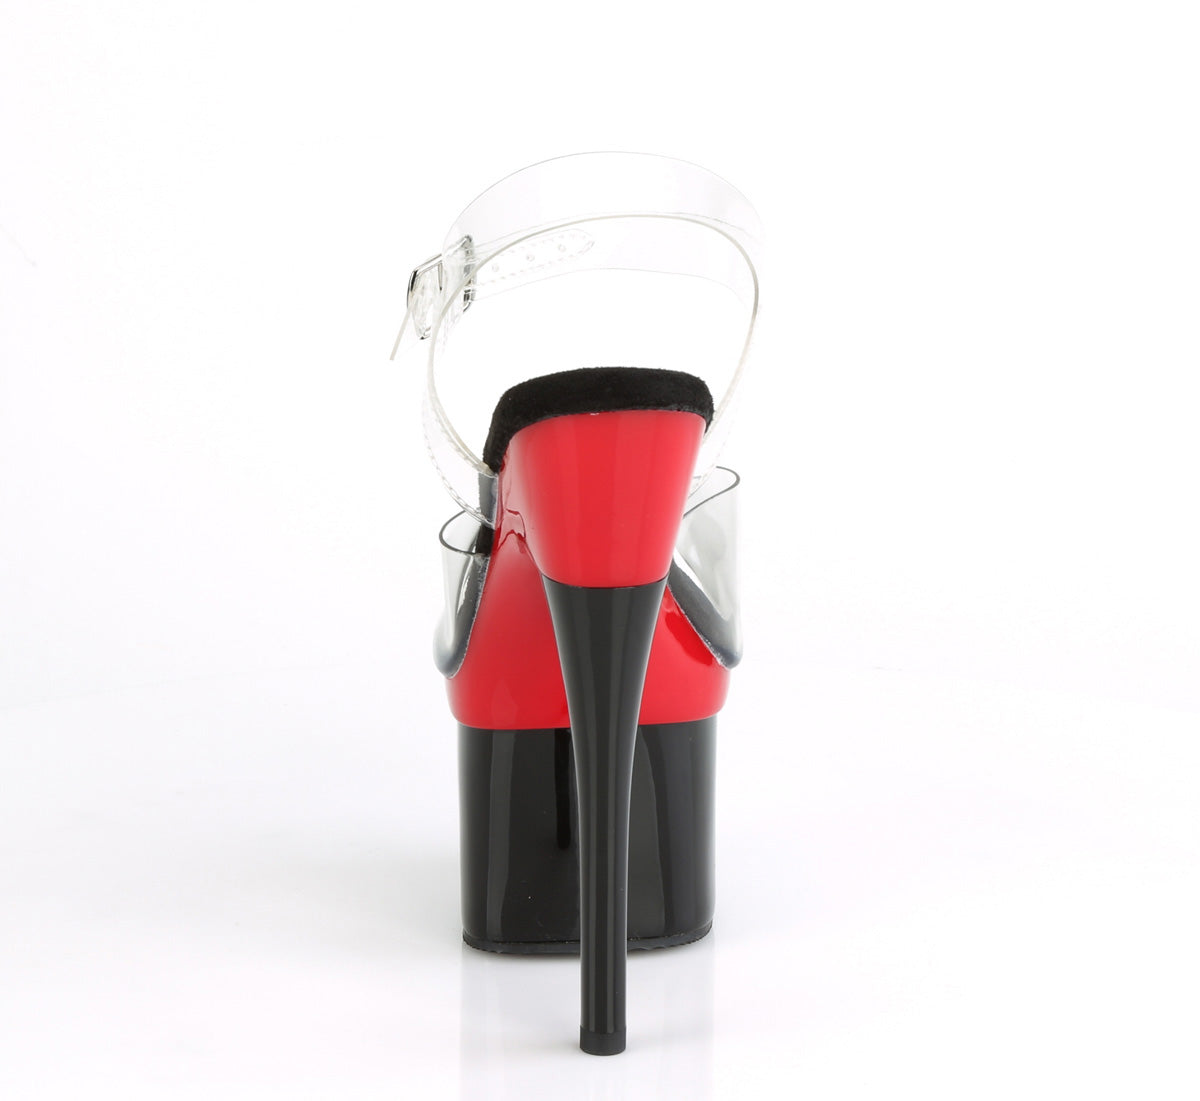 Pleaser Womens Sandals ESTEEM-708 Clr/Red-Blk